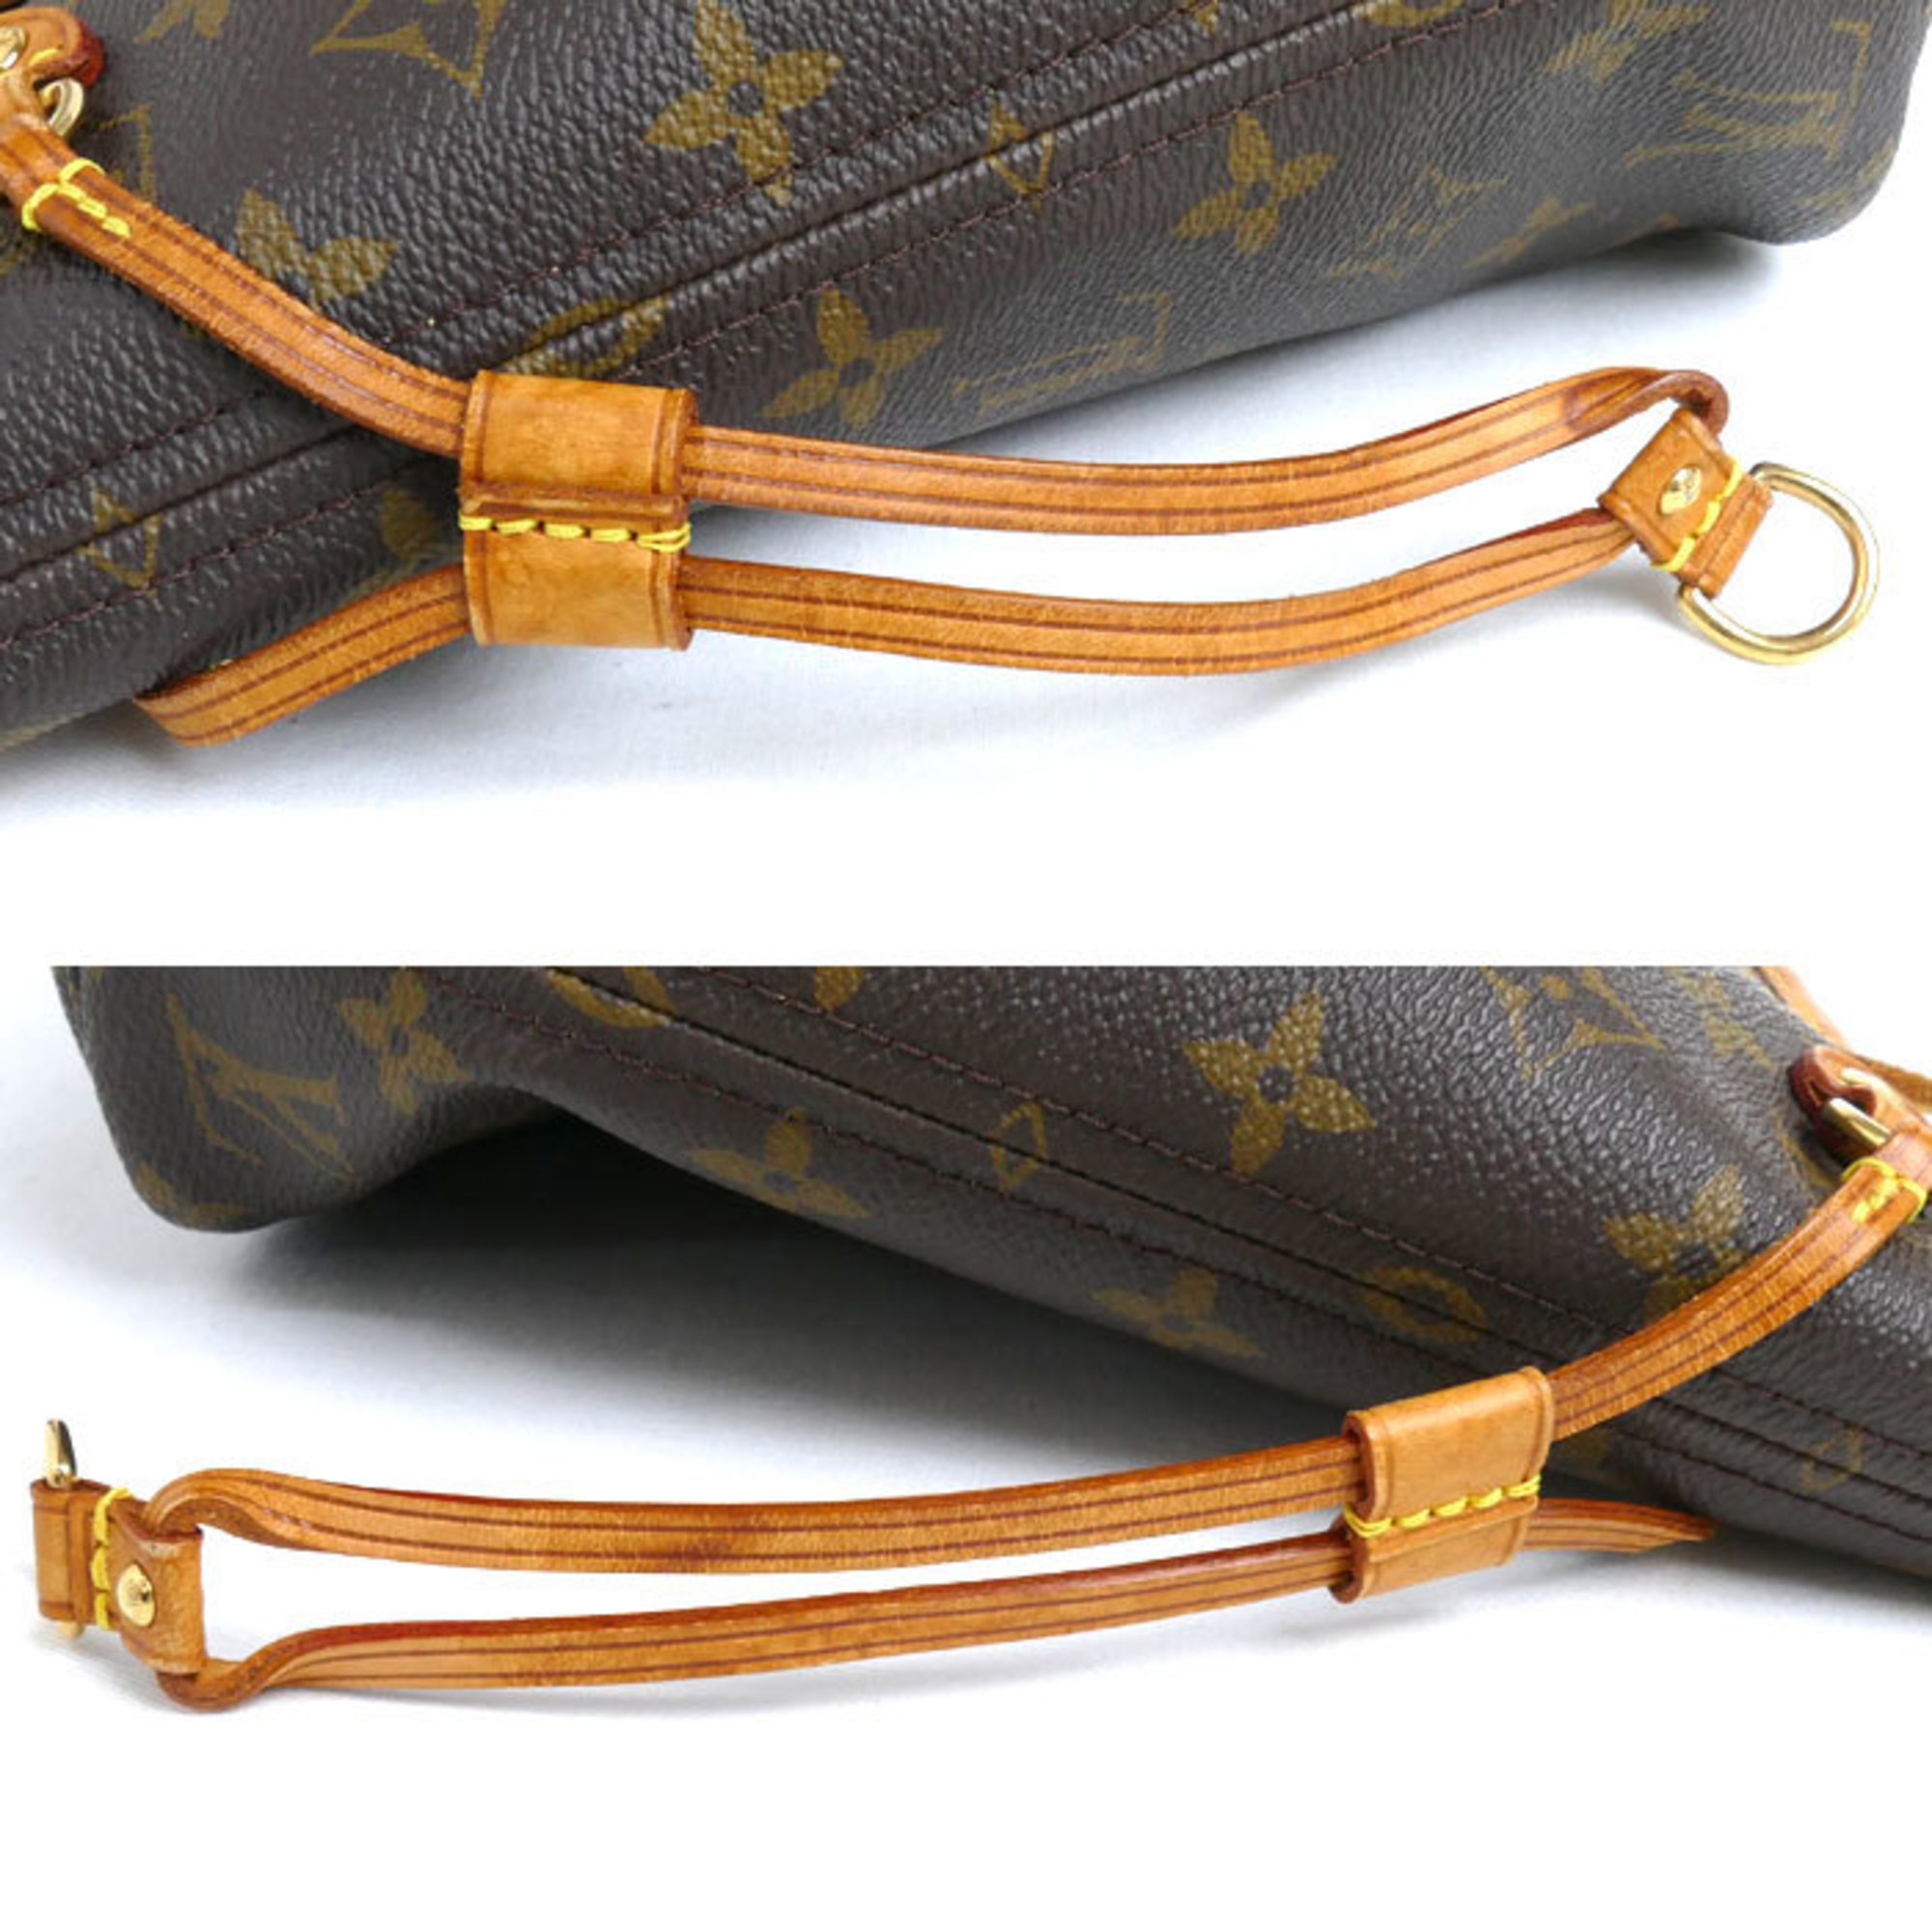 LOUIS VUITTON Louis Vuitton Neverfull PM Tote Bag Monogram Brown M40155 Women's